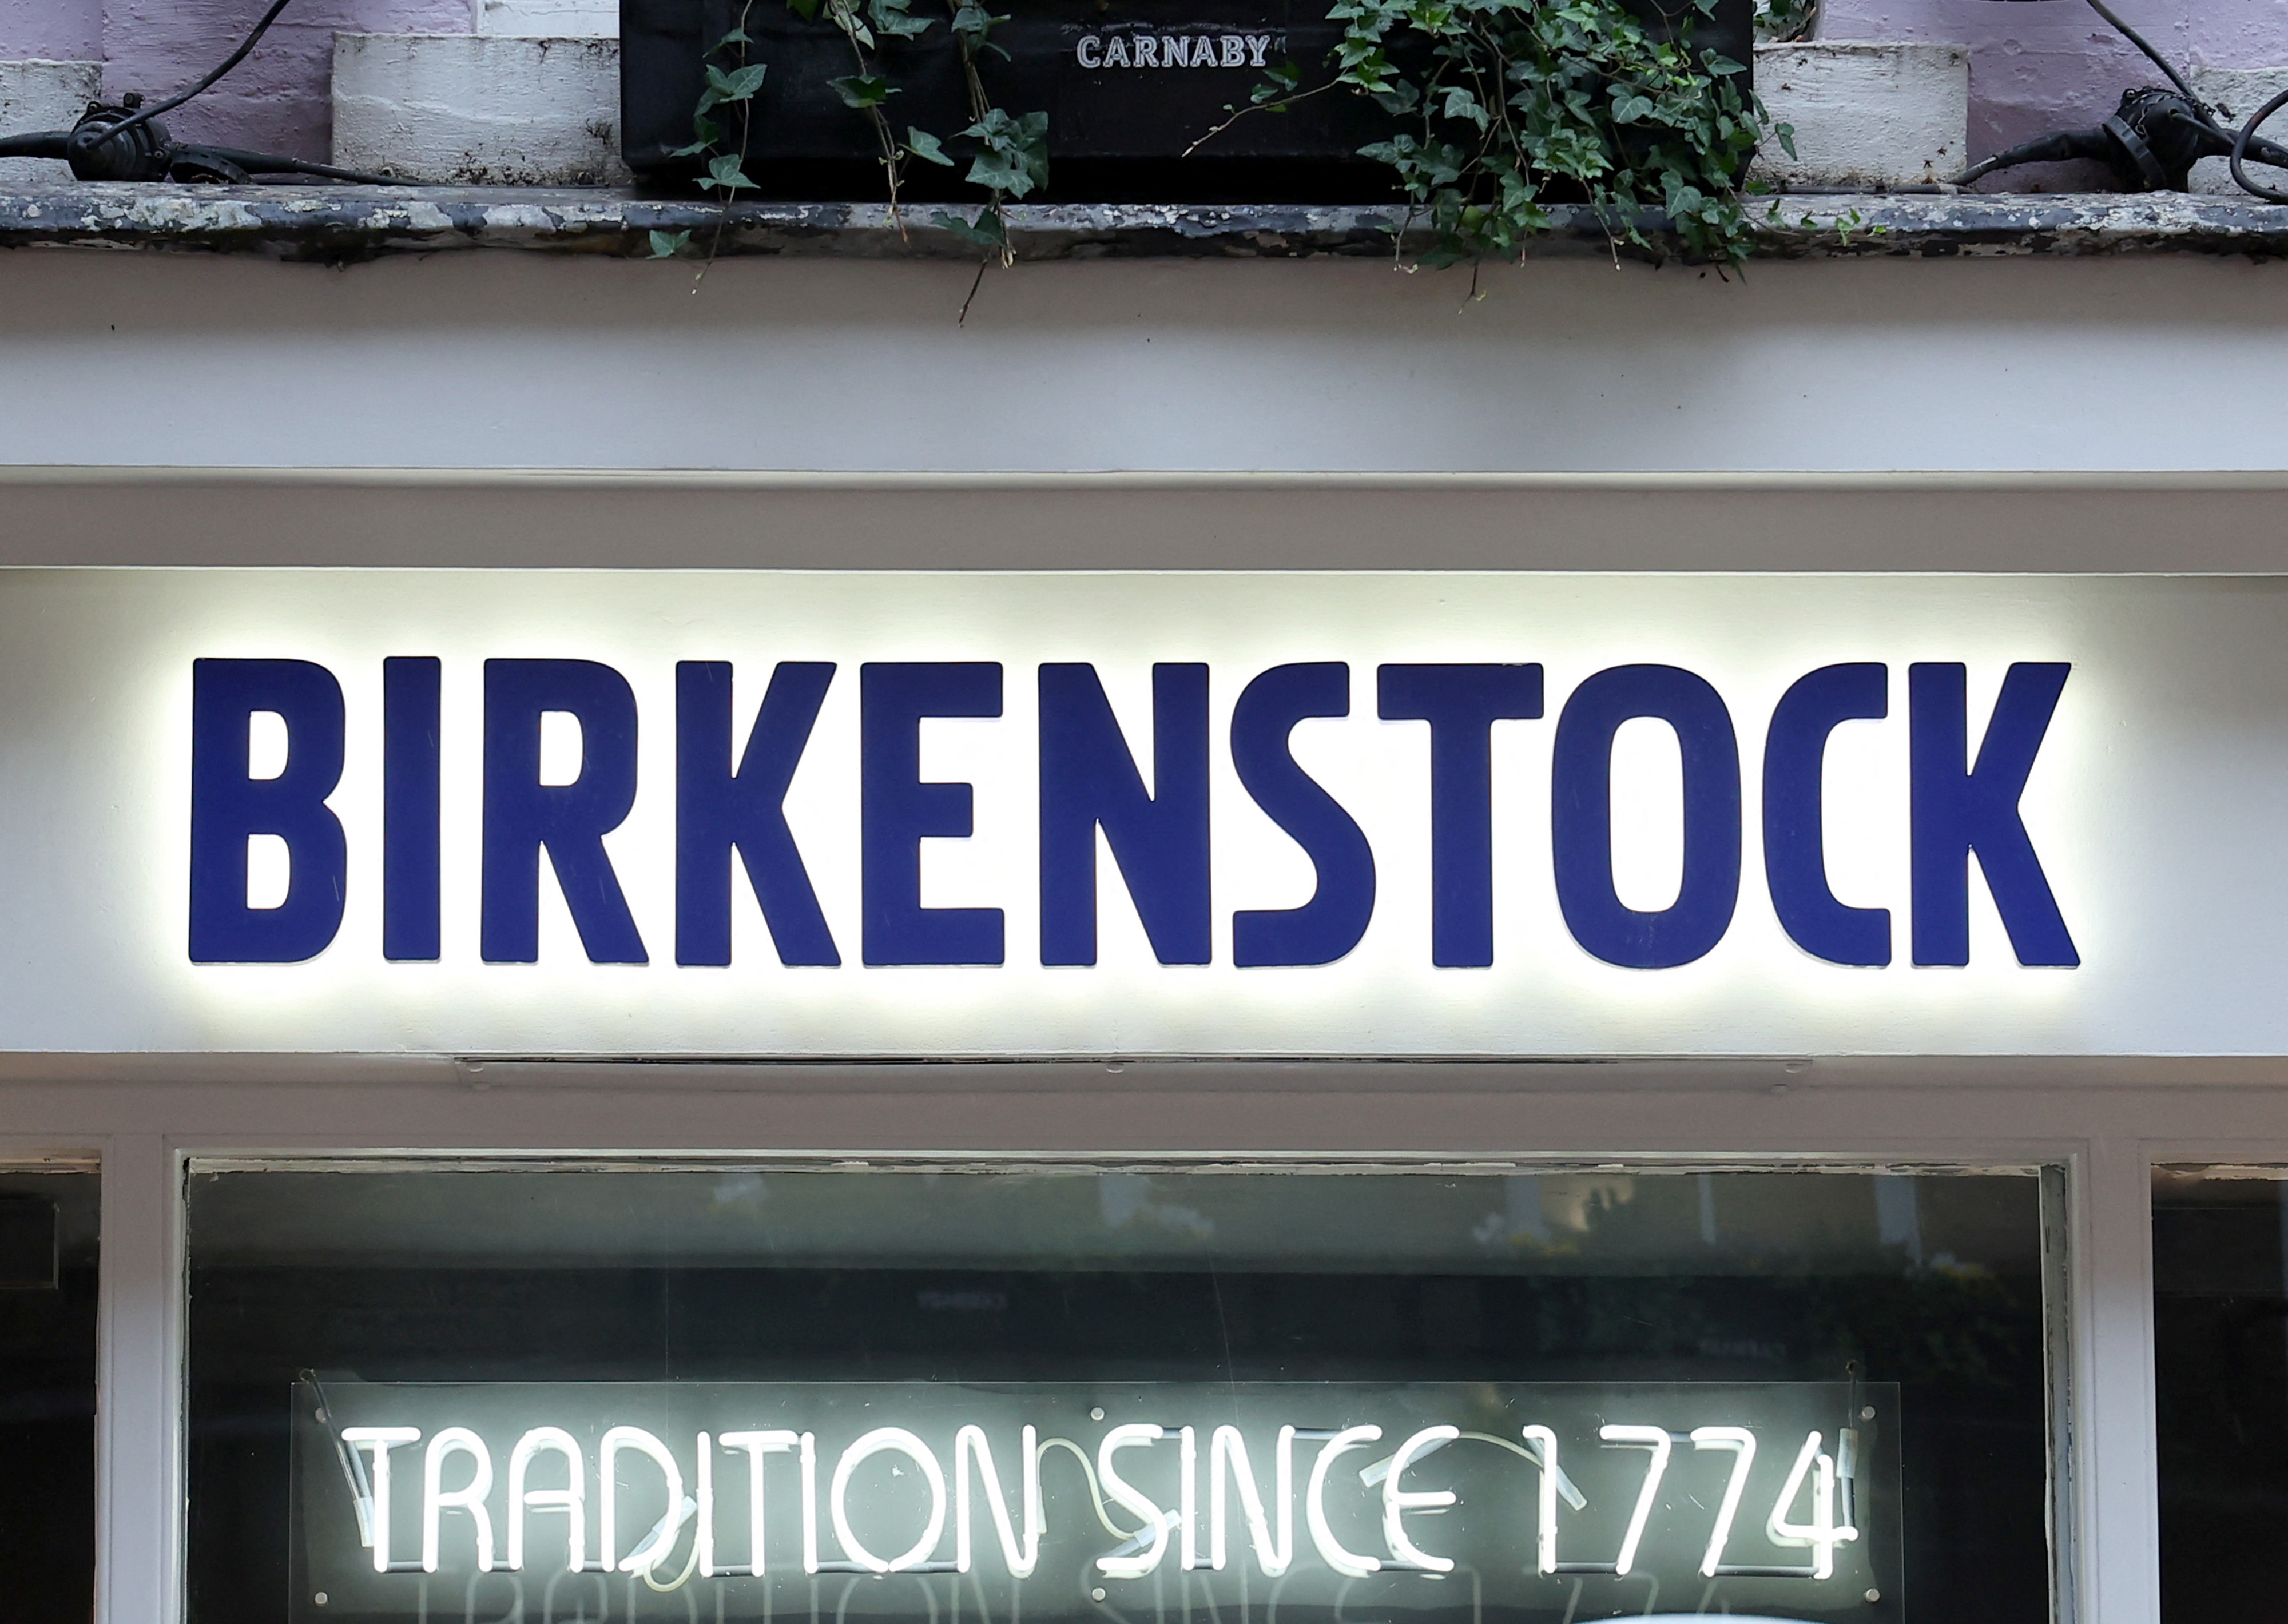 Birkenstock Raises $1.48 Billion in Its I.P.O. - The New York Times